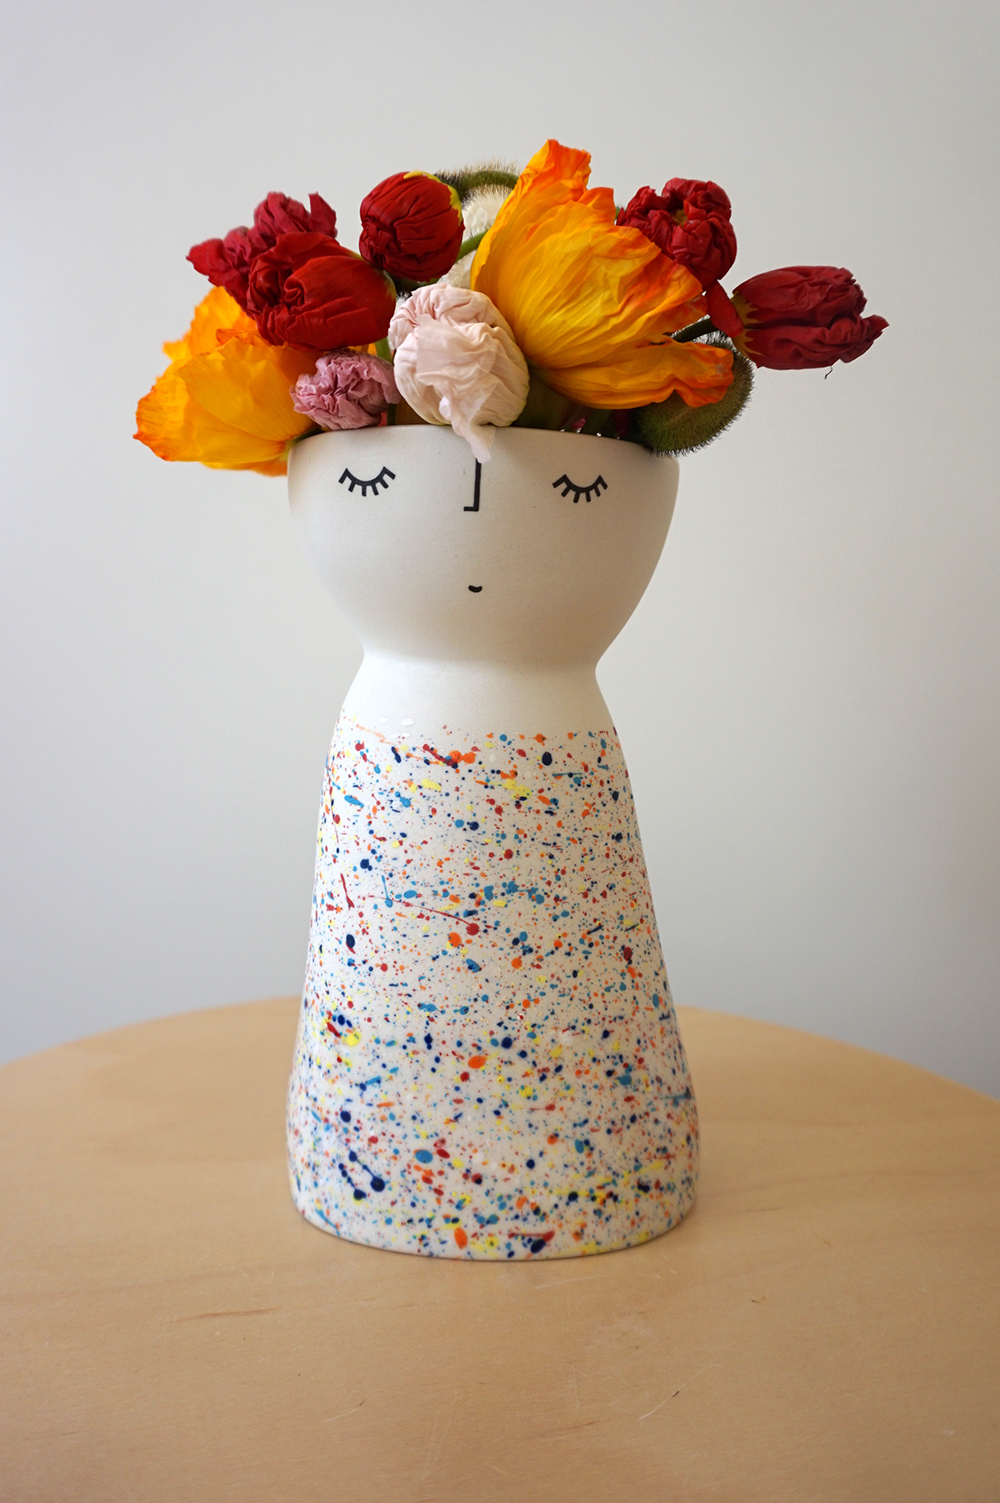 Lanky Vase $170